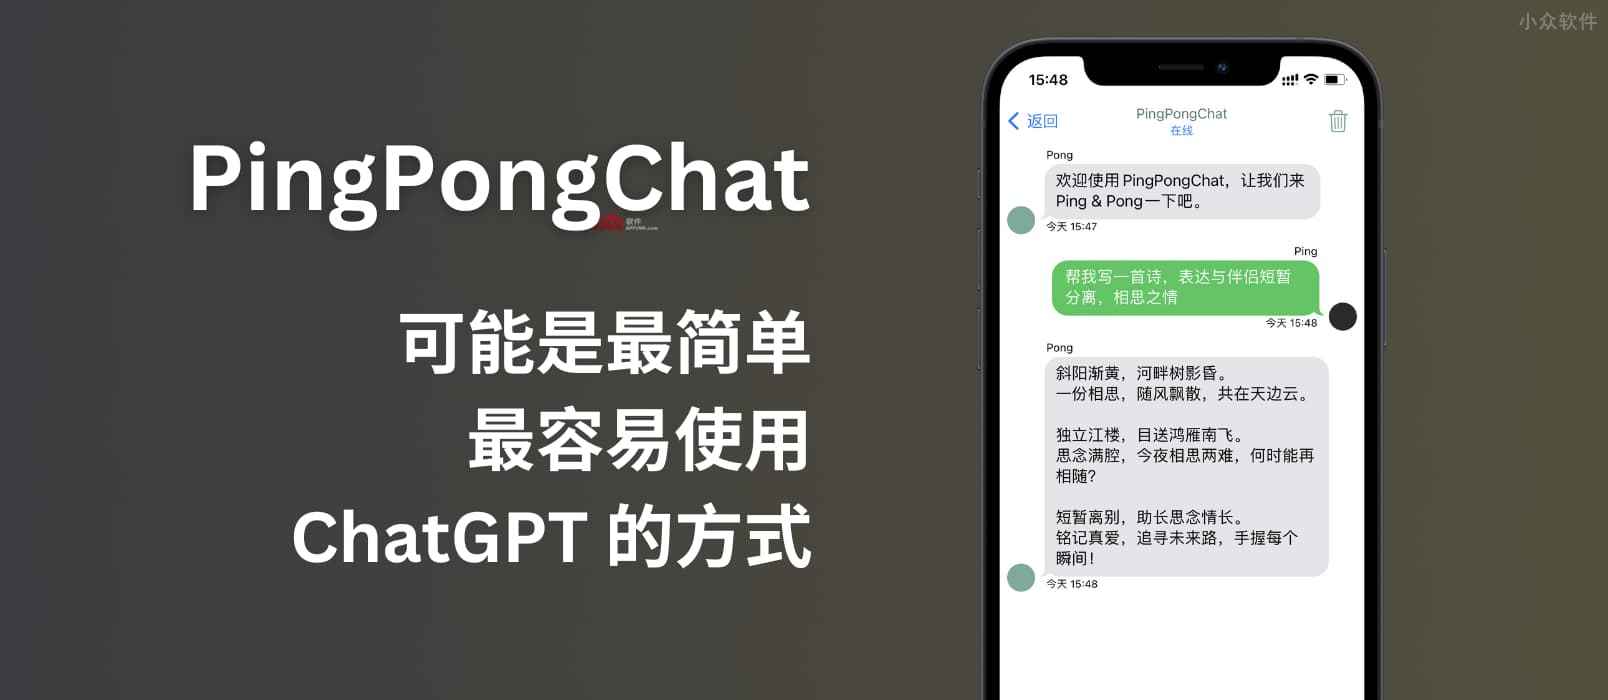 PingPongChat - 这可能是目前最易用的智能AI使用方式了[iOS/macOS] 1